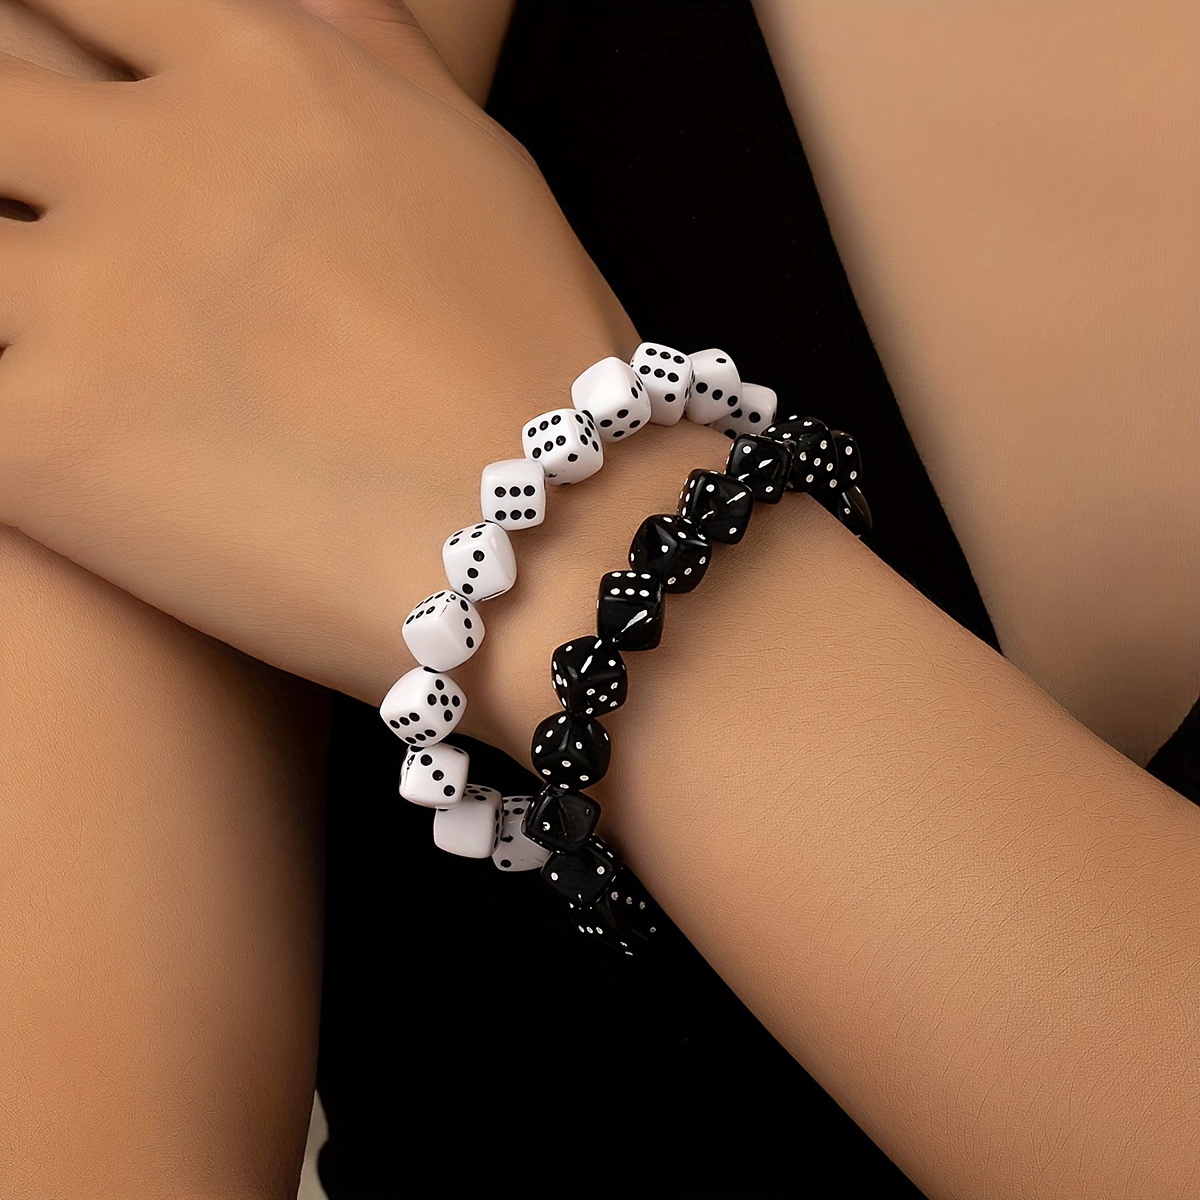 

2pcs Black White Dice Beads Beaded Bracelet Set Funny Hand String For Couples Friend